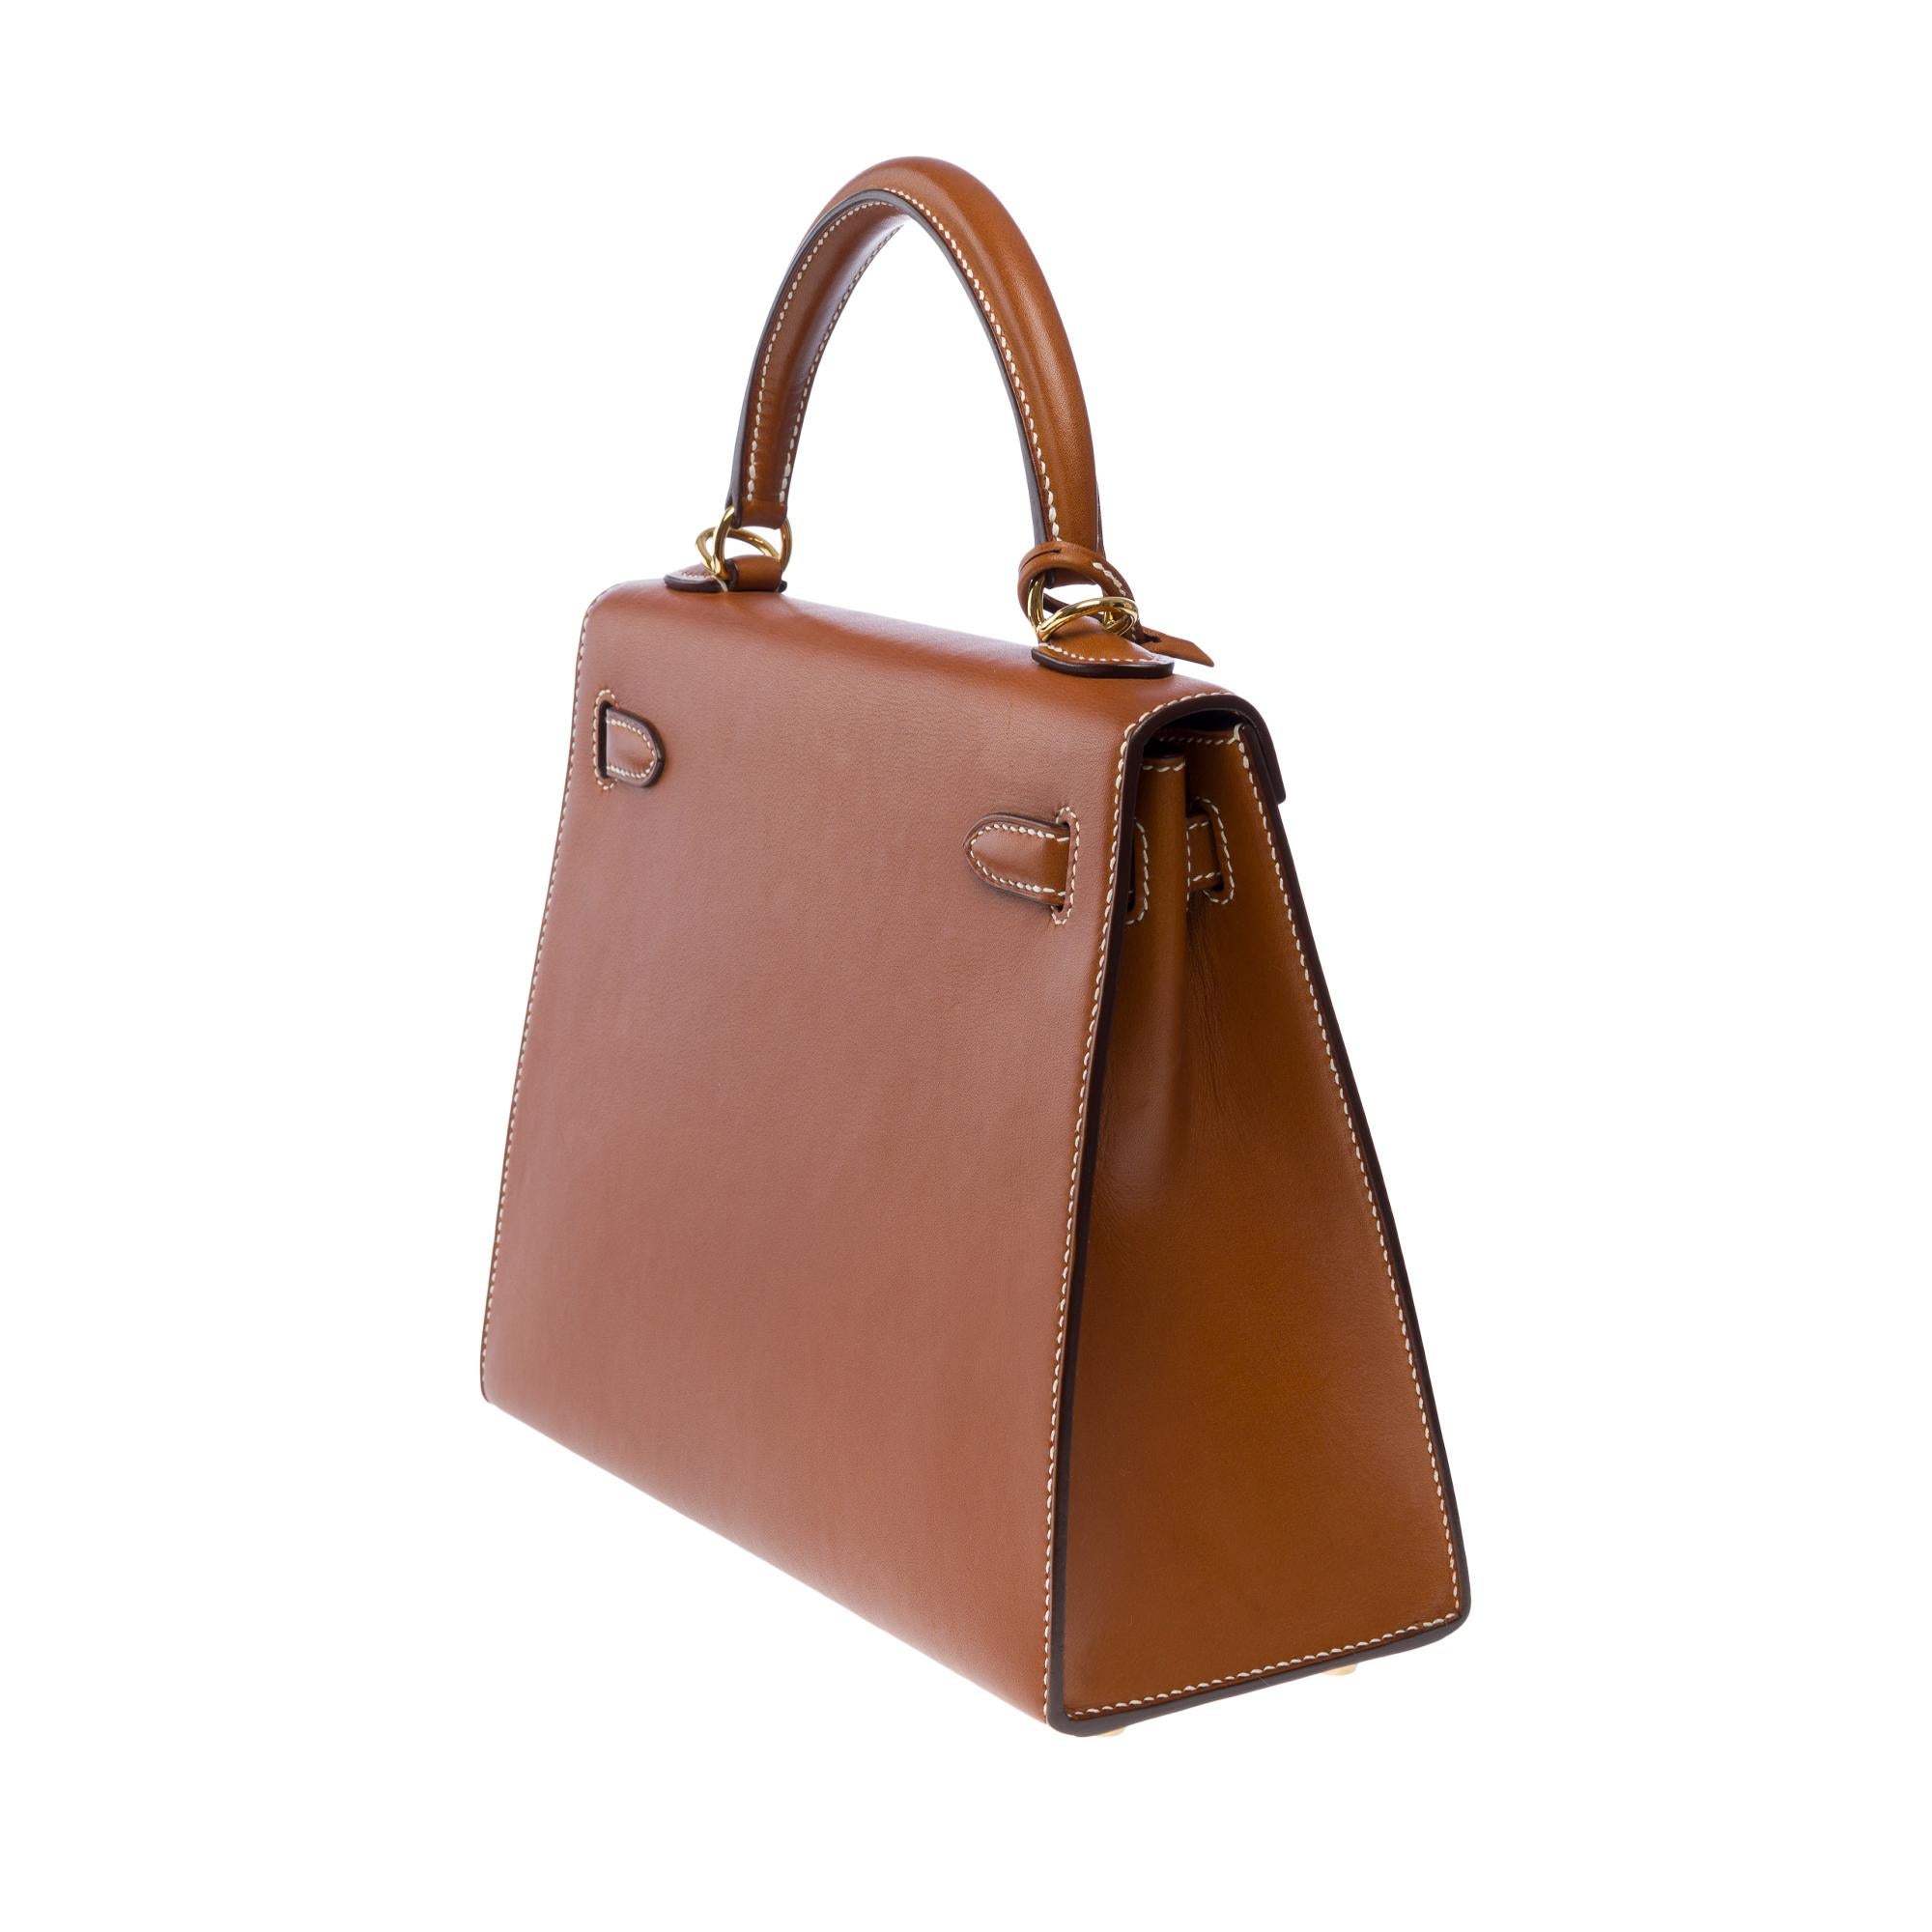 Very Rare Hermès Kelly 25 sellier handbag strap in Gold Barenia leather, GHW 2